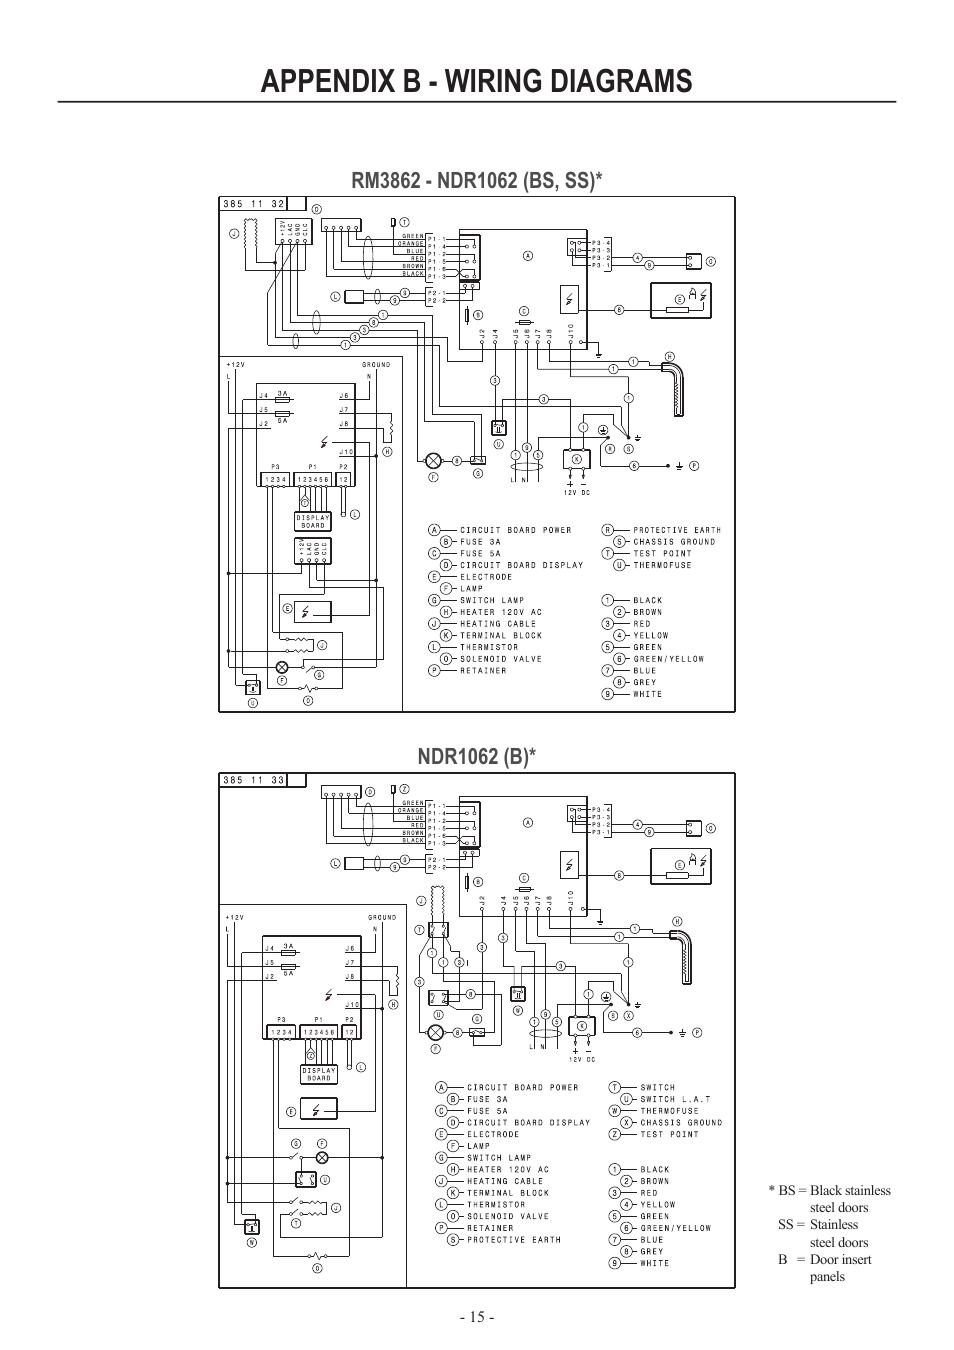 Appendix b - wiring diagrams, Ndr1062 (b) | Dometic RM2852 User Manual